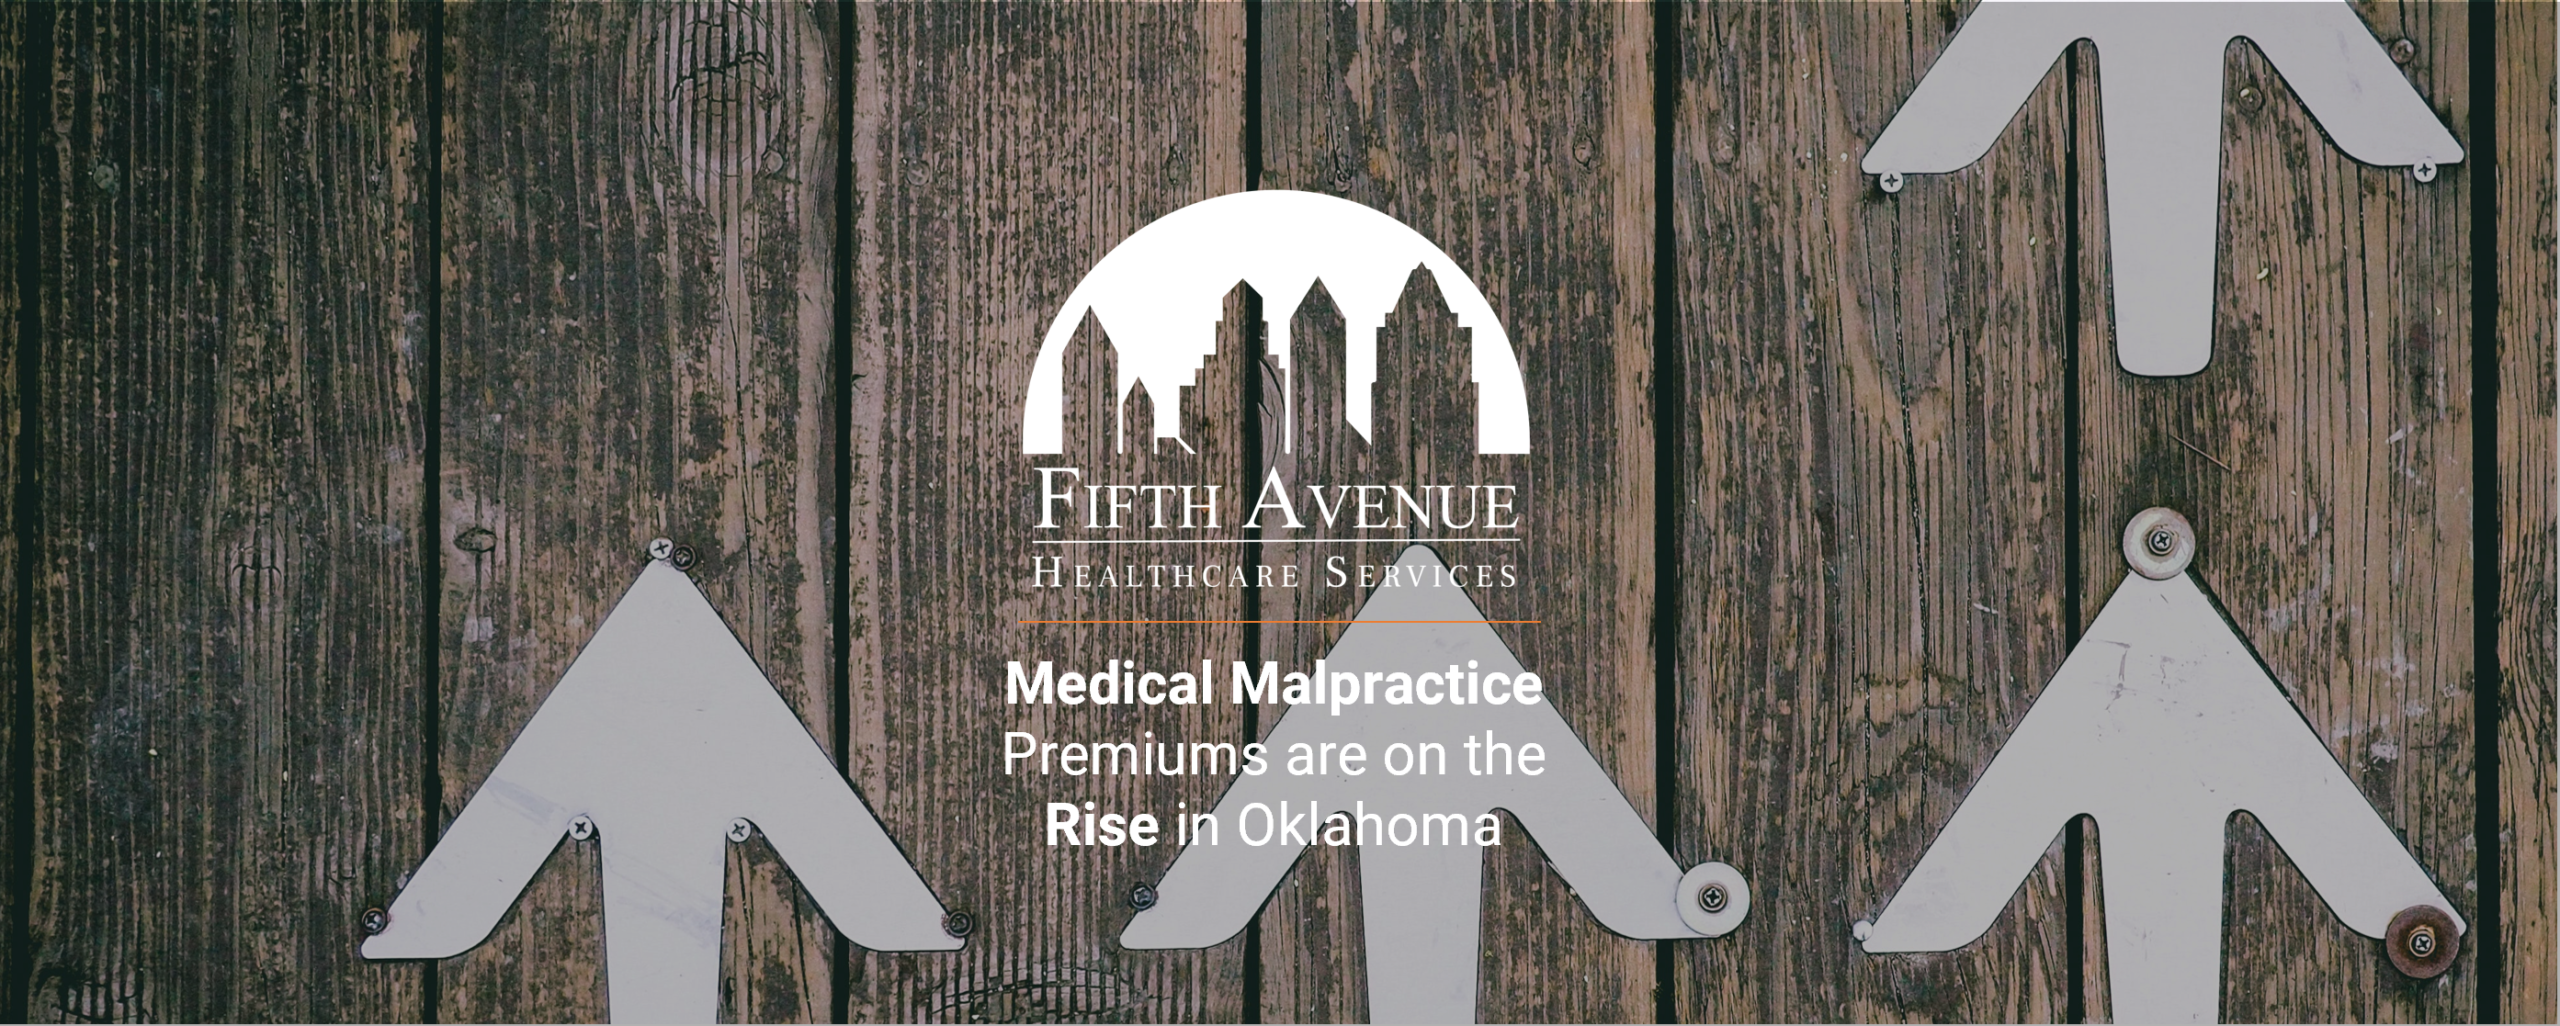 FifthAvenueHealthcareServices.com Medical Malpractice Premiums Rising